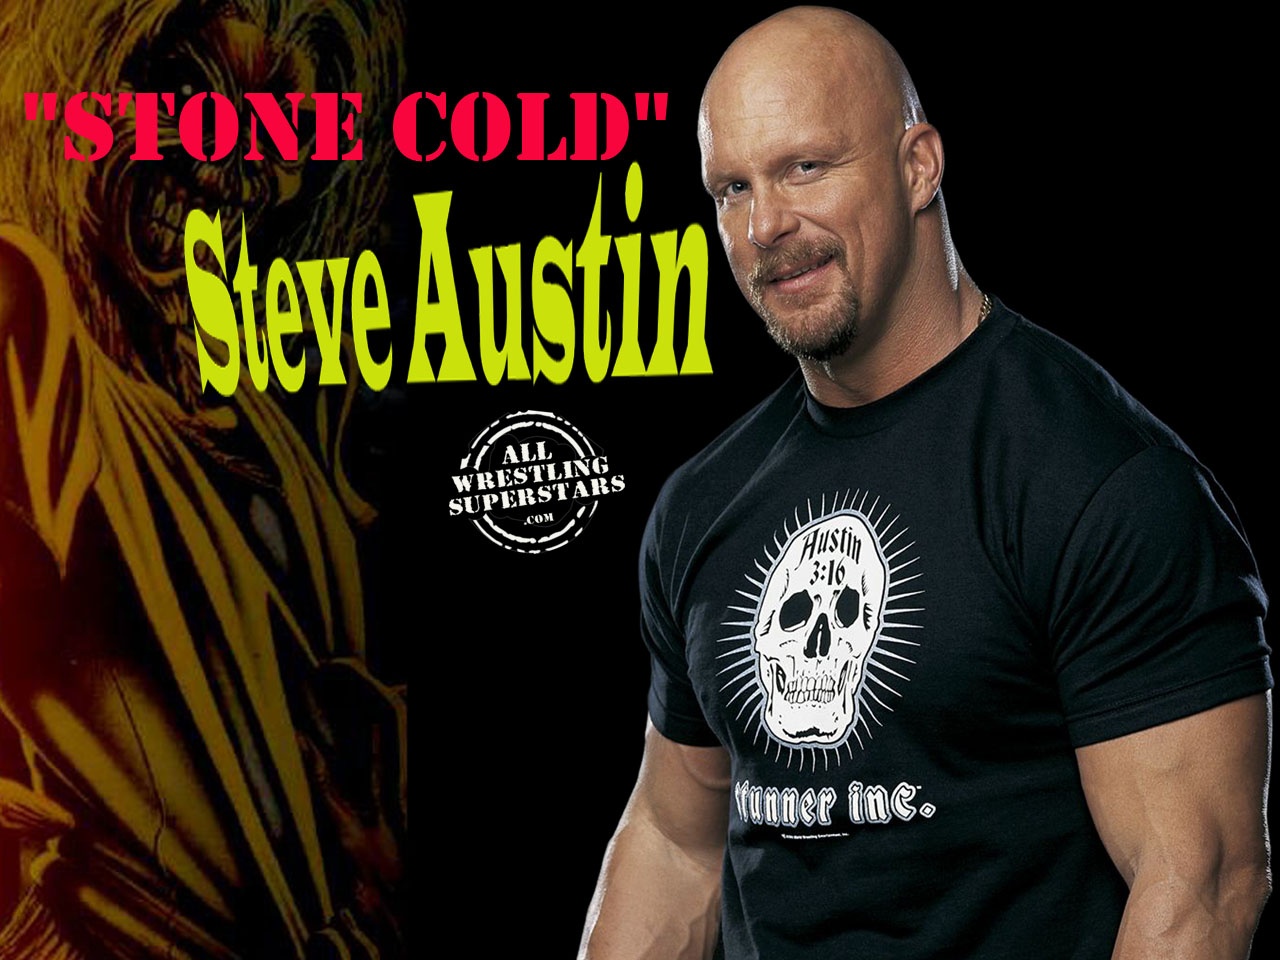 Pro Wrestler Stone Cold Steve Austin Endorses Same Sex